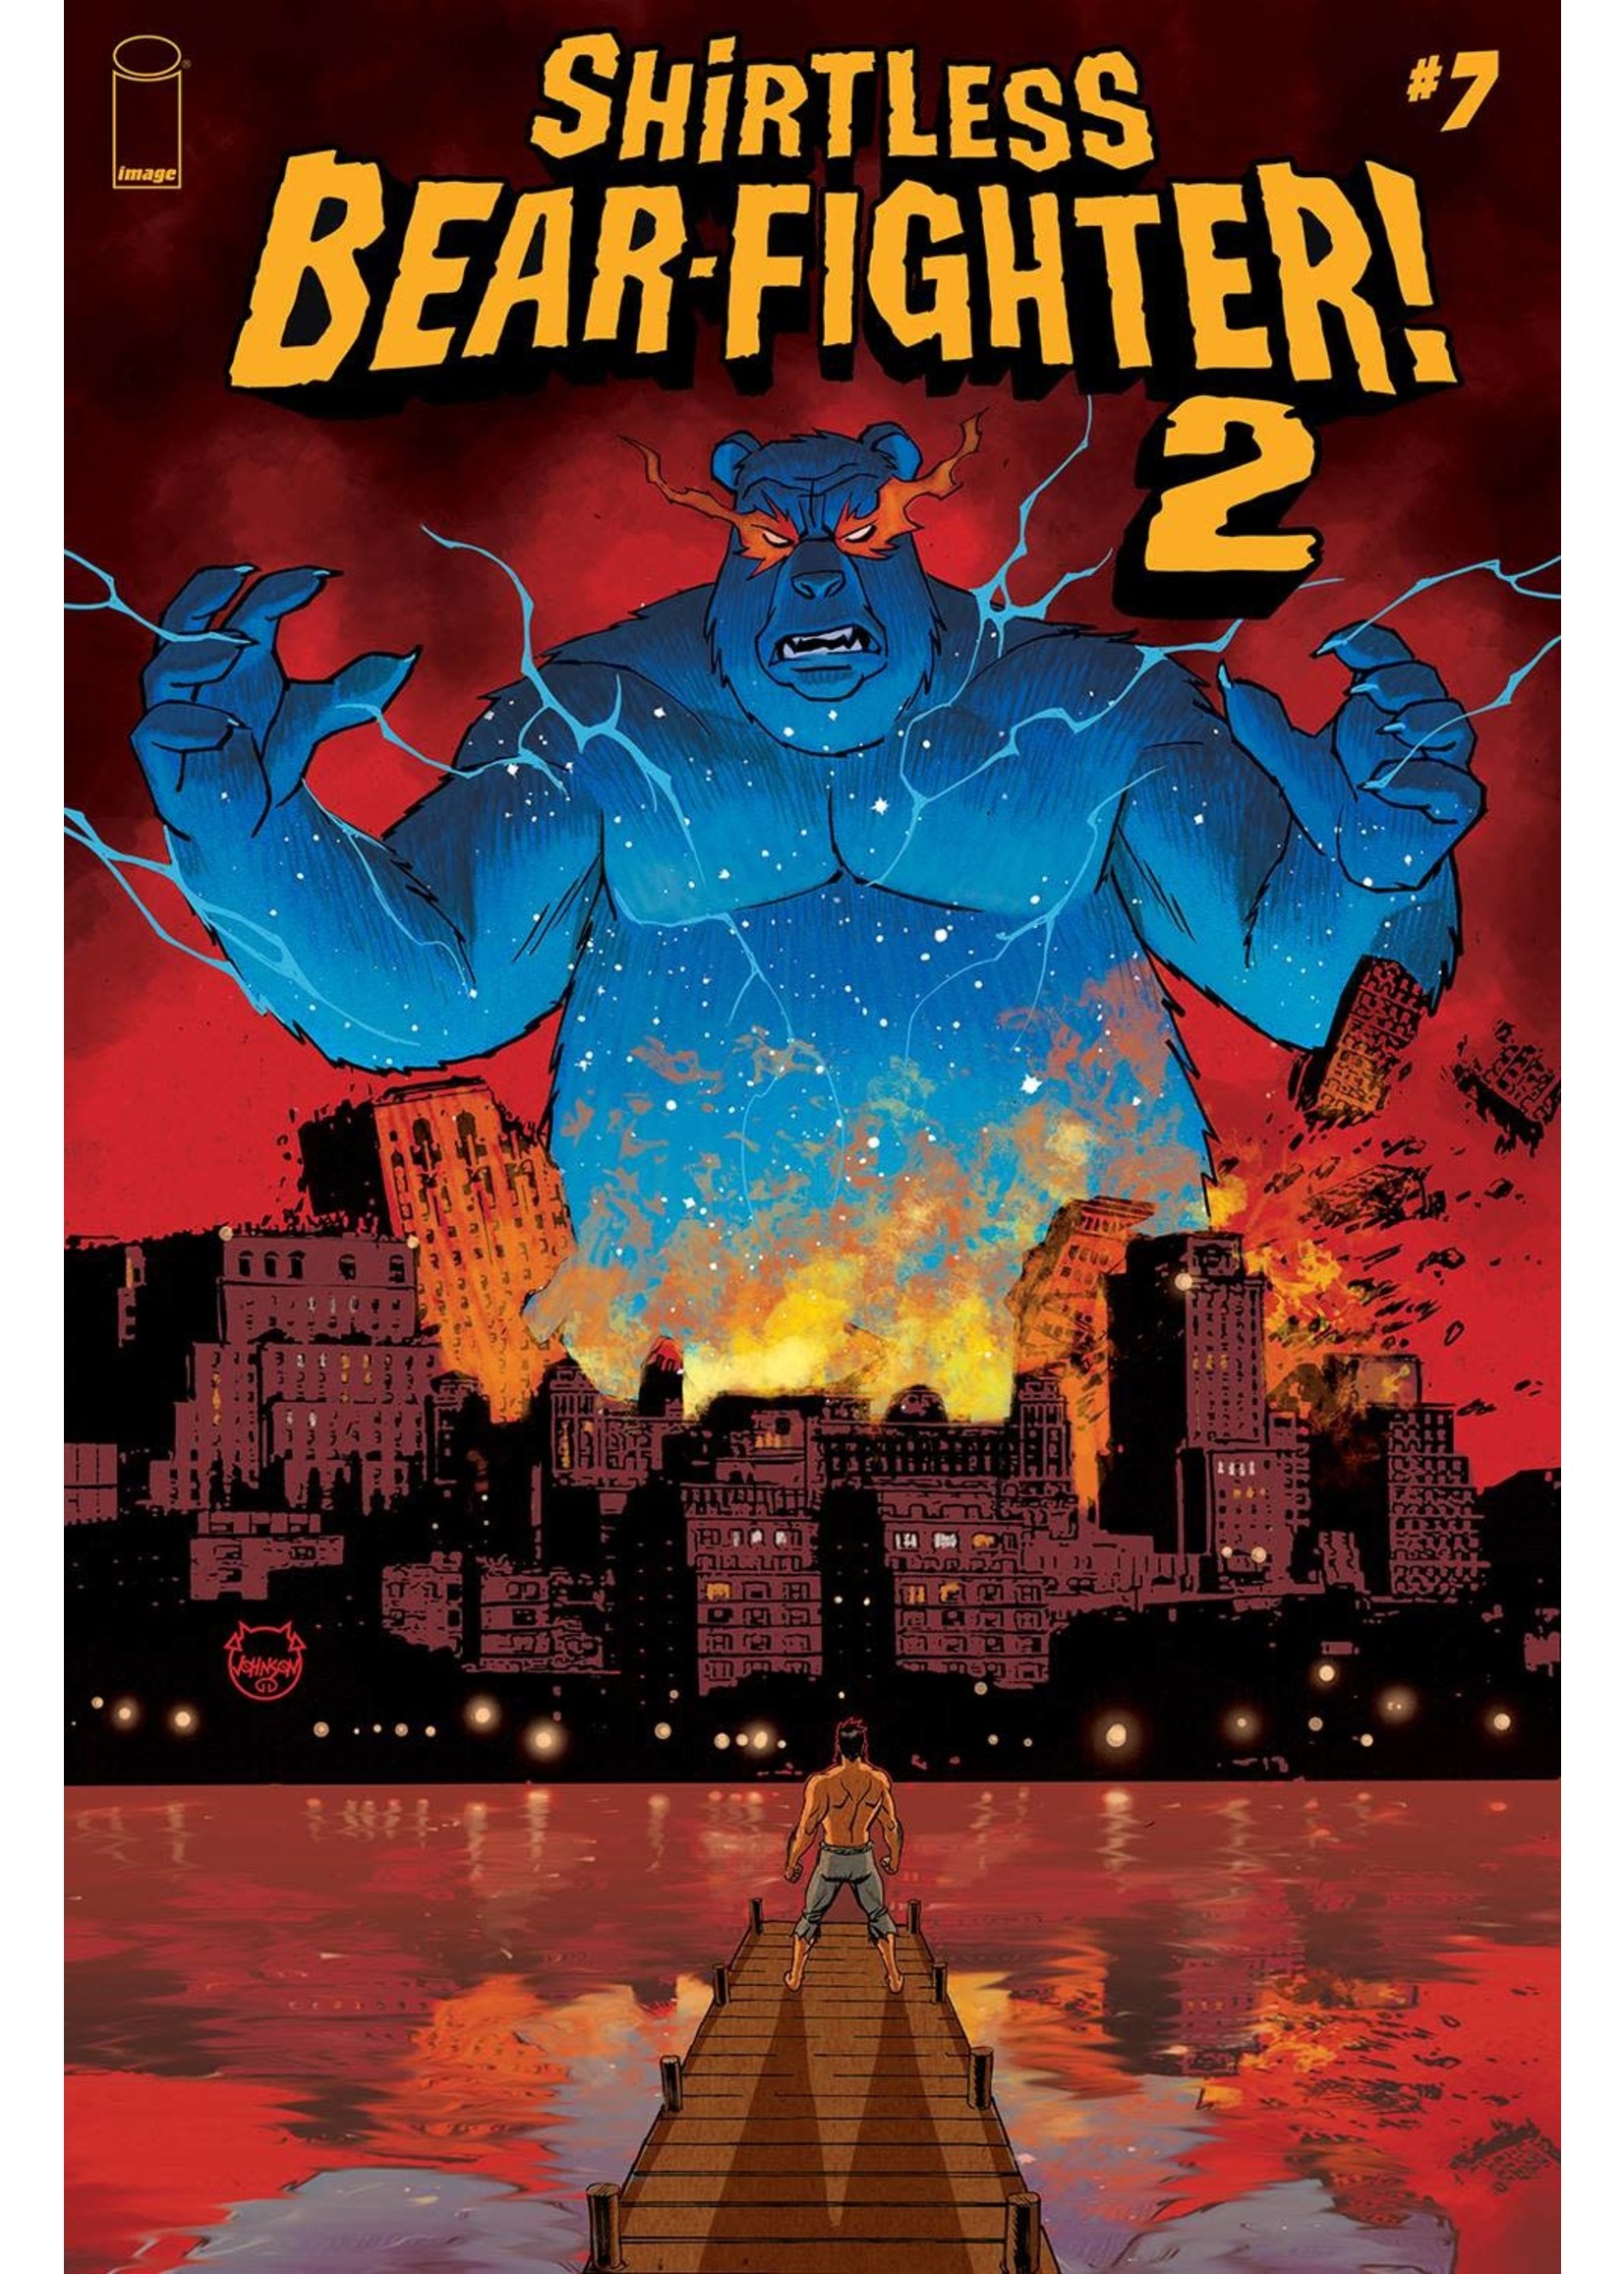 IMAGE COMICS SHIRTLESS BEAR-FIGHTER 2 #7 (OF 7) CVR A JOHNSON